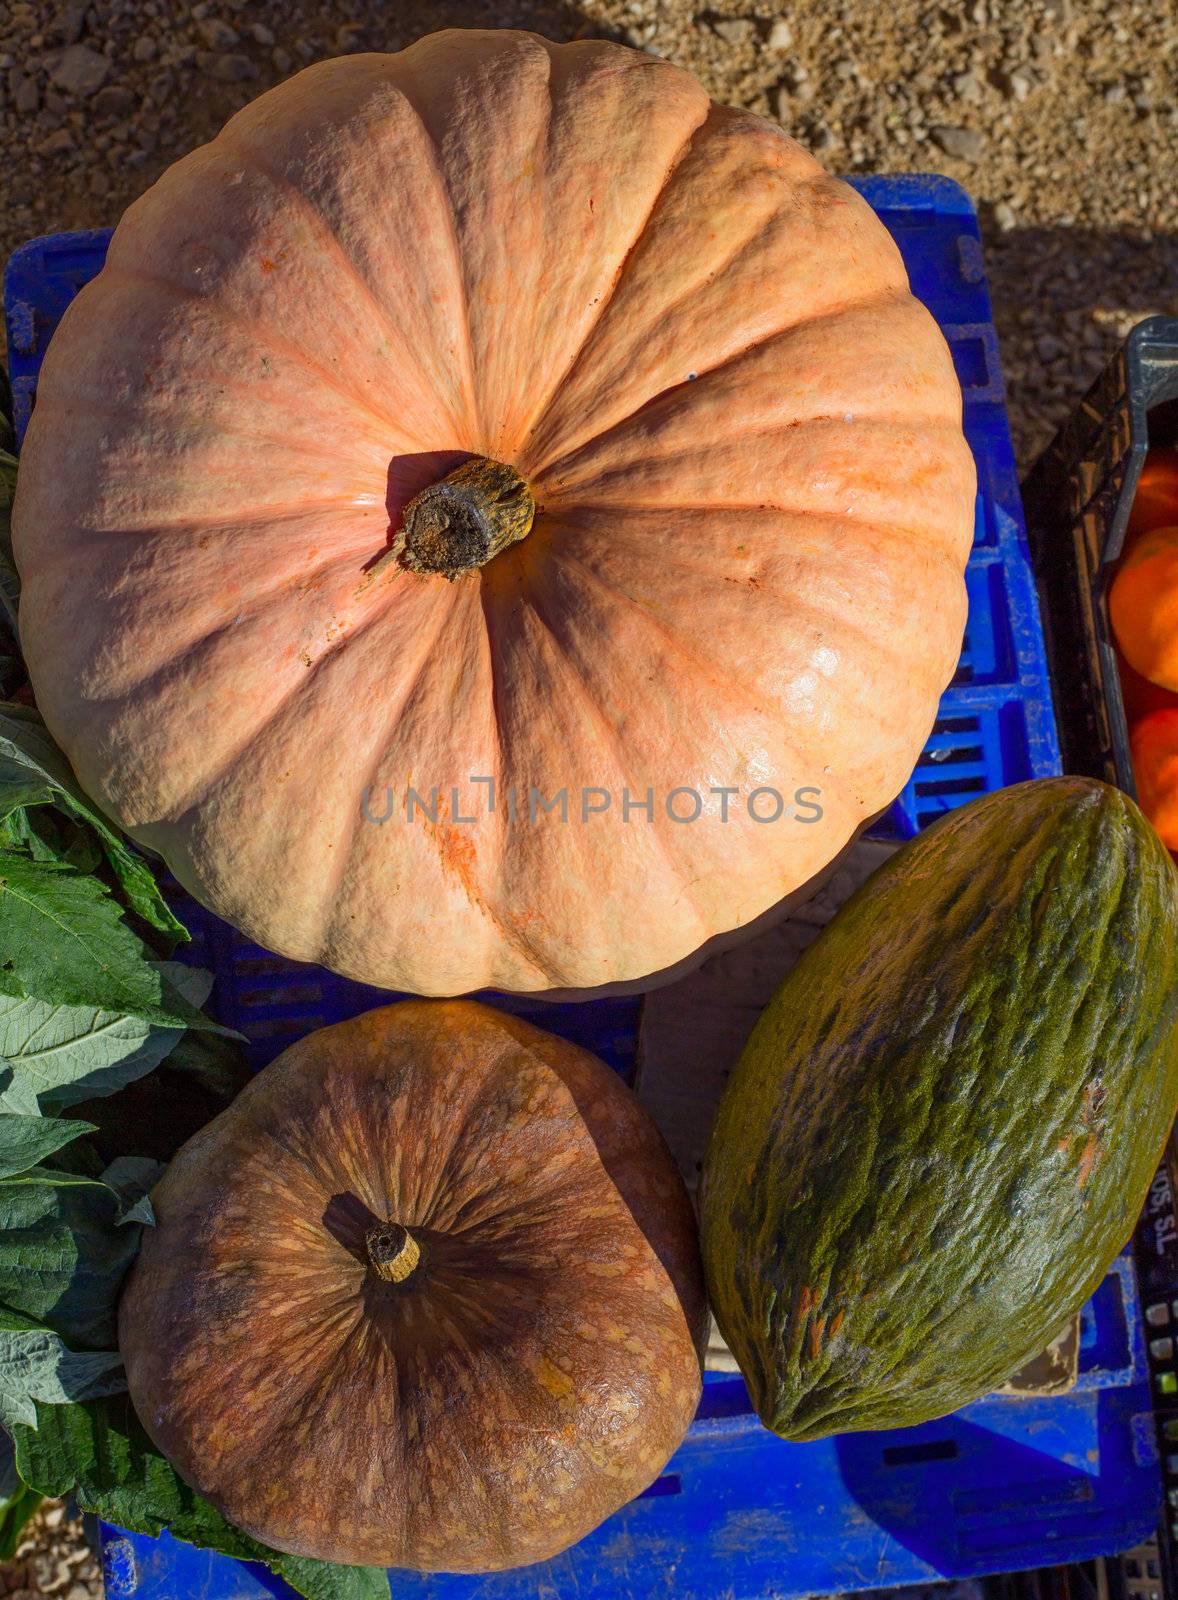 Melon and Pumpkin in autumn fall at market by lunamarina